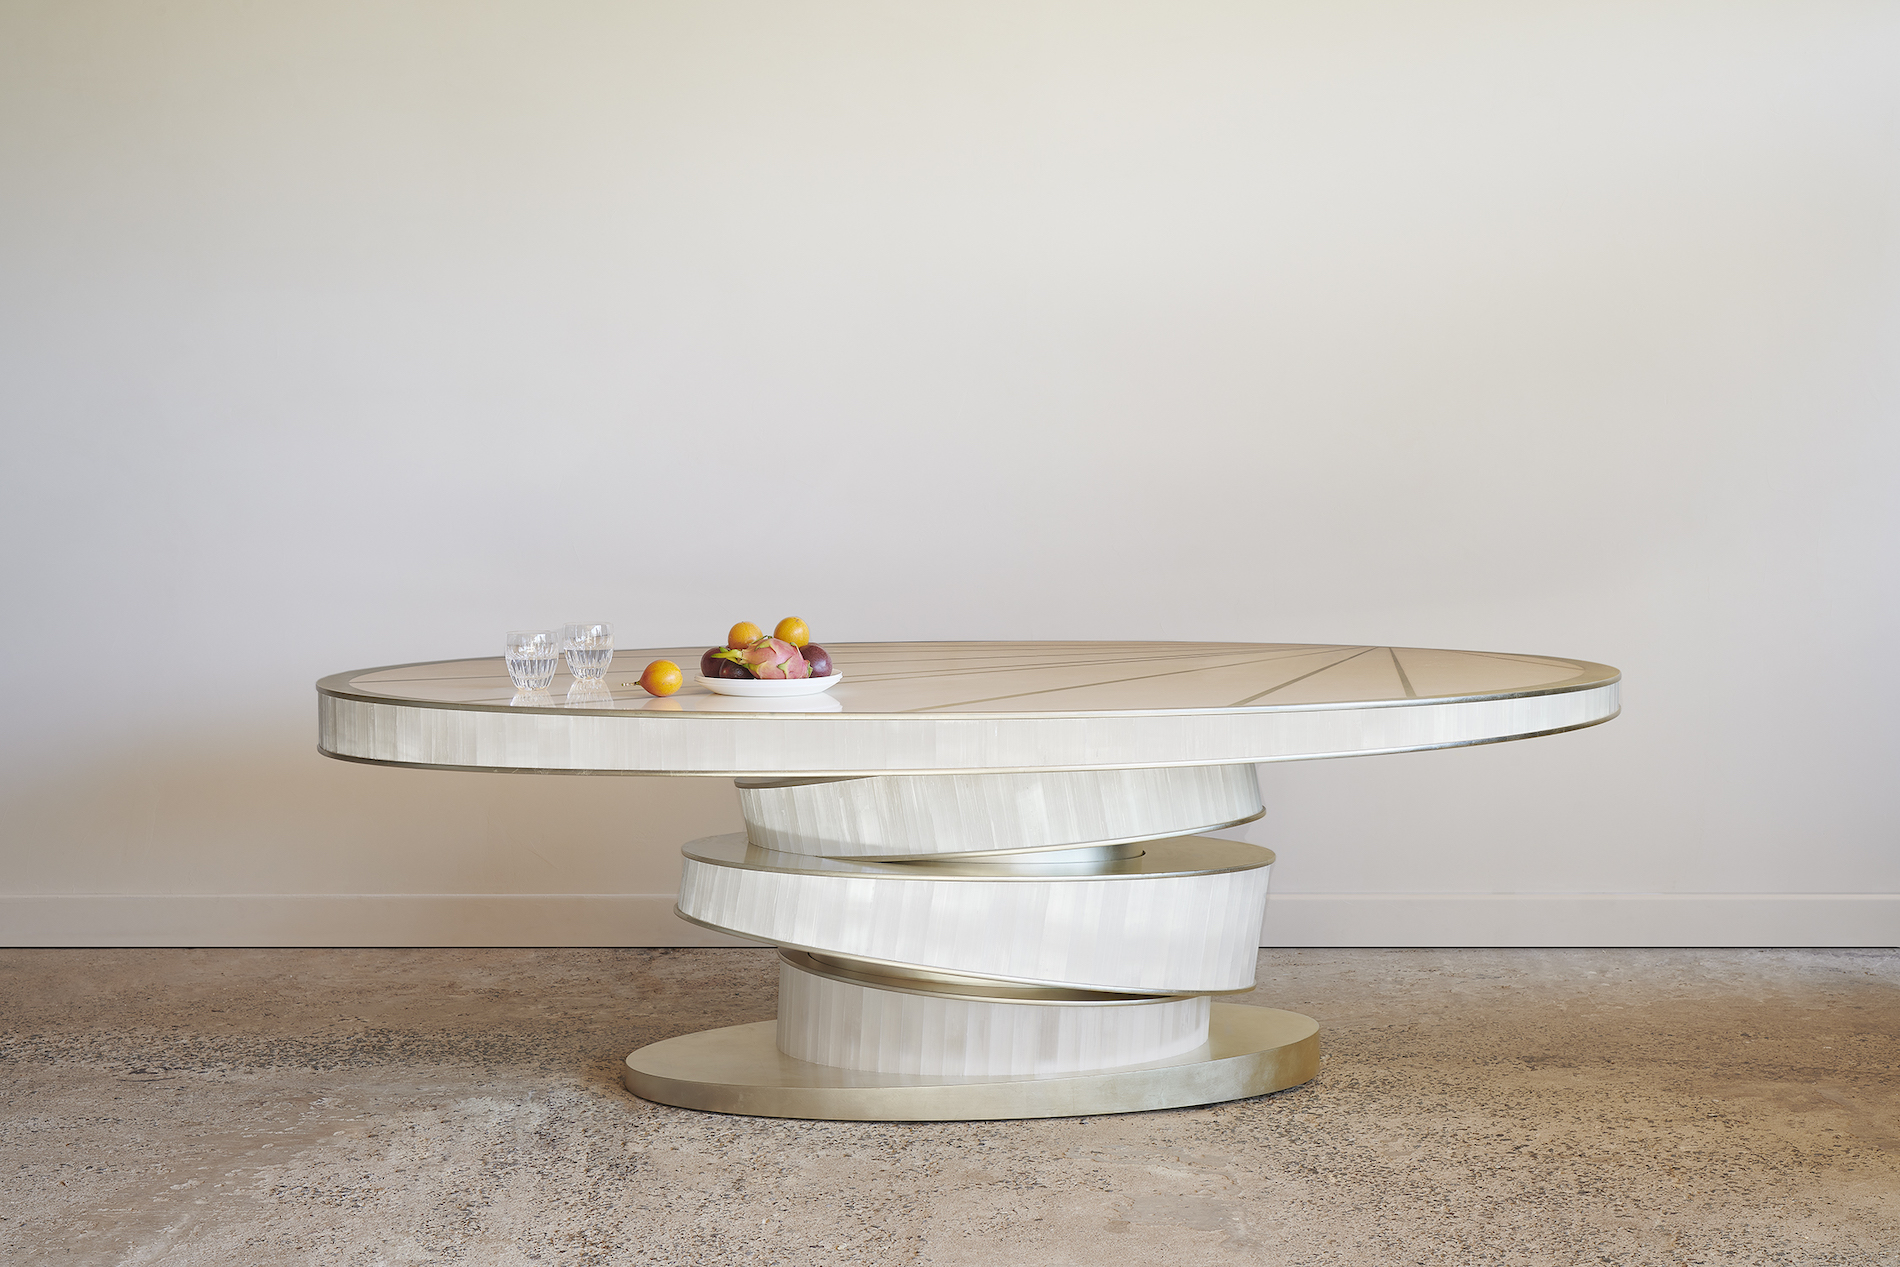 Galerie Jallu presented their "Ring Table" at PAD Paris 2023